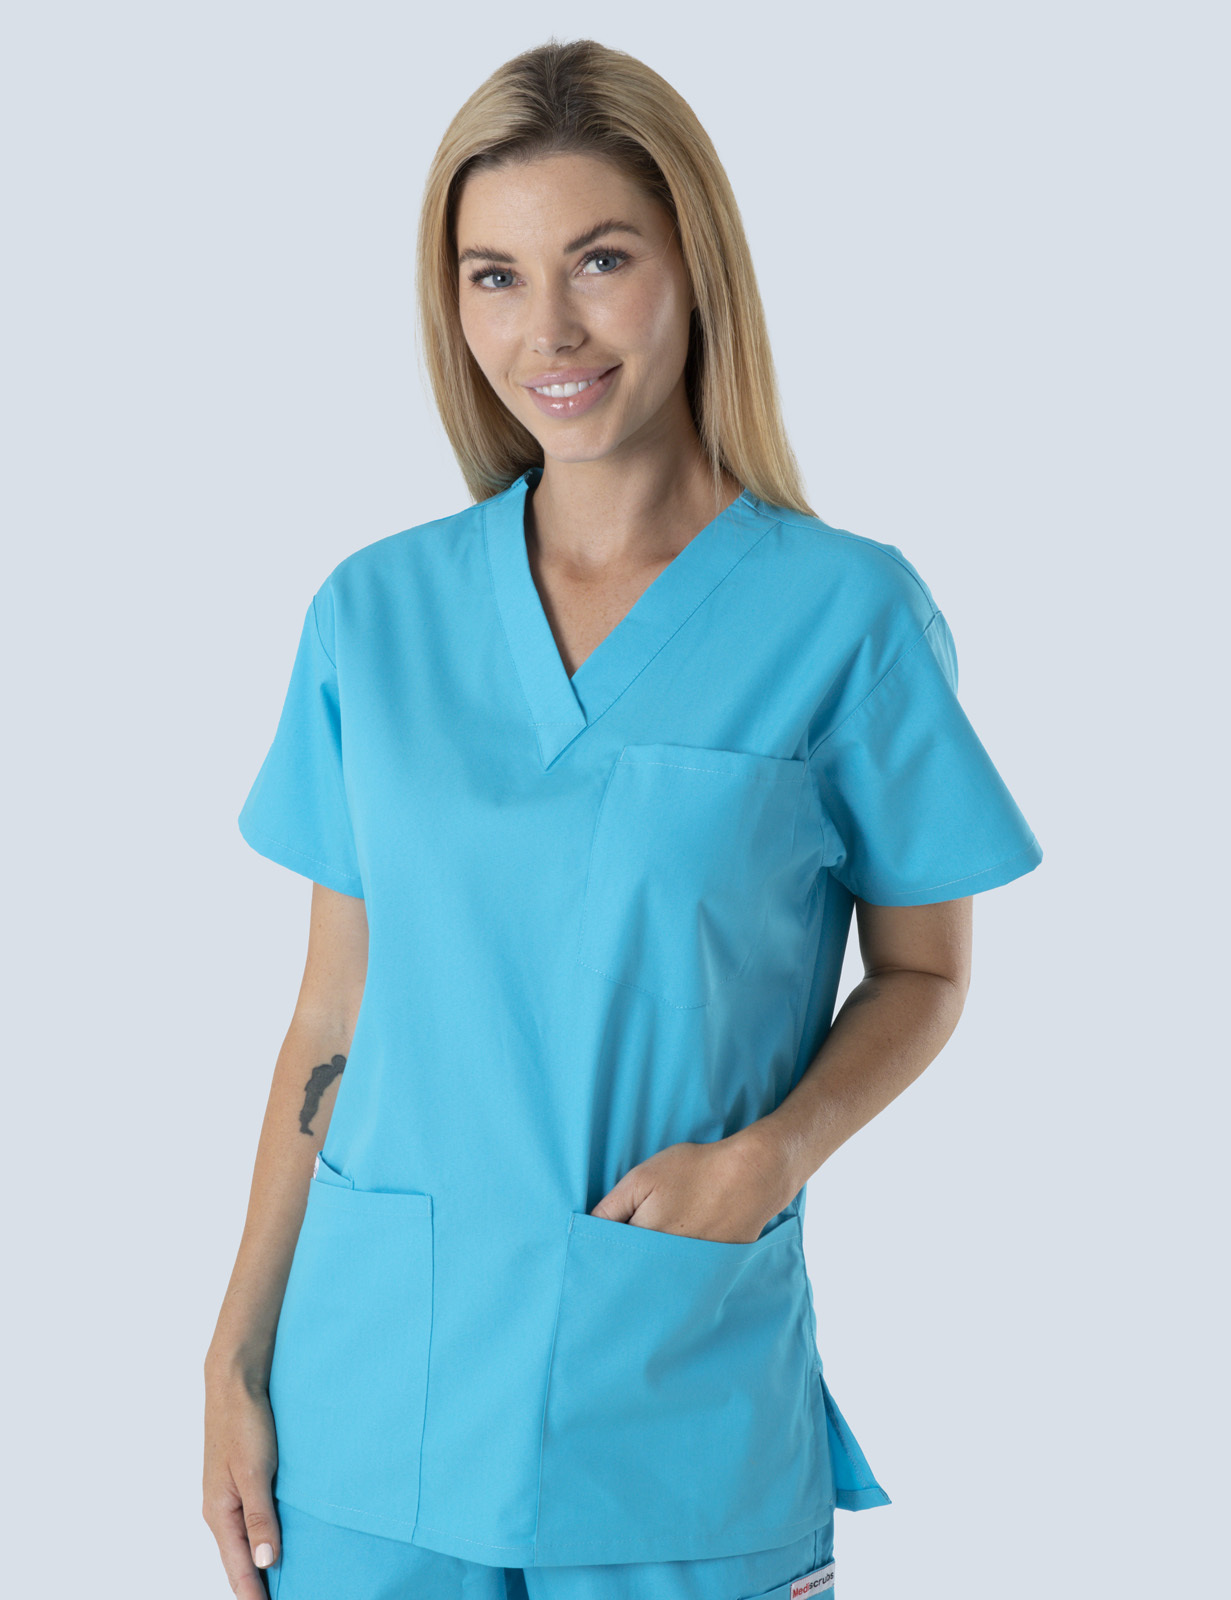 Queensland Children's Hospital Emergency Department Senior Medical Officer Uniform Top Bundle  (4 Pocket Top in Aqua  incl Logos)